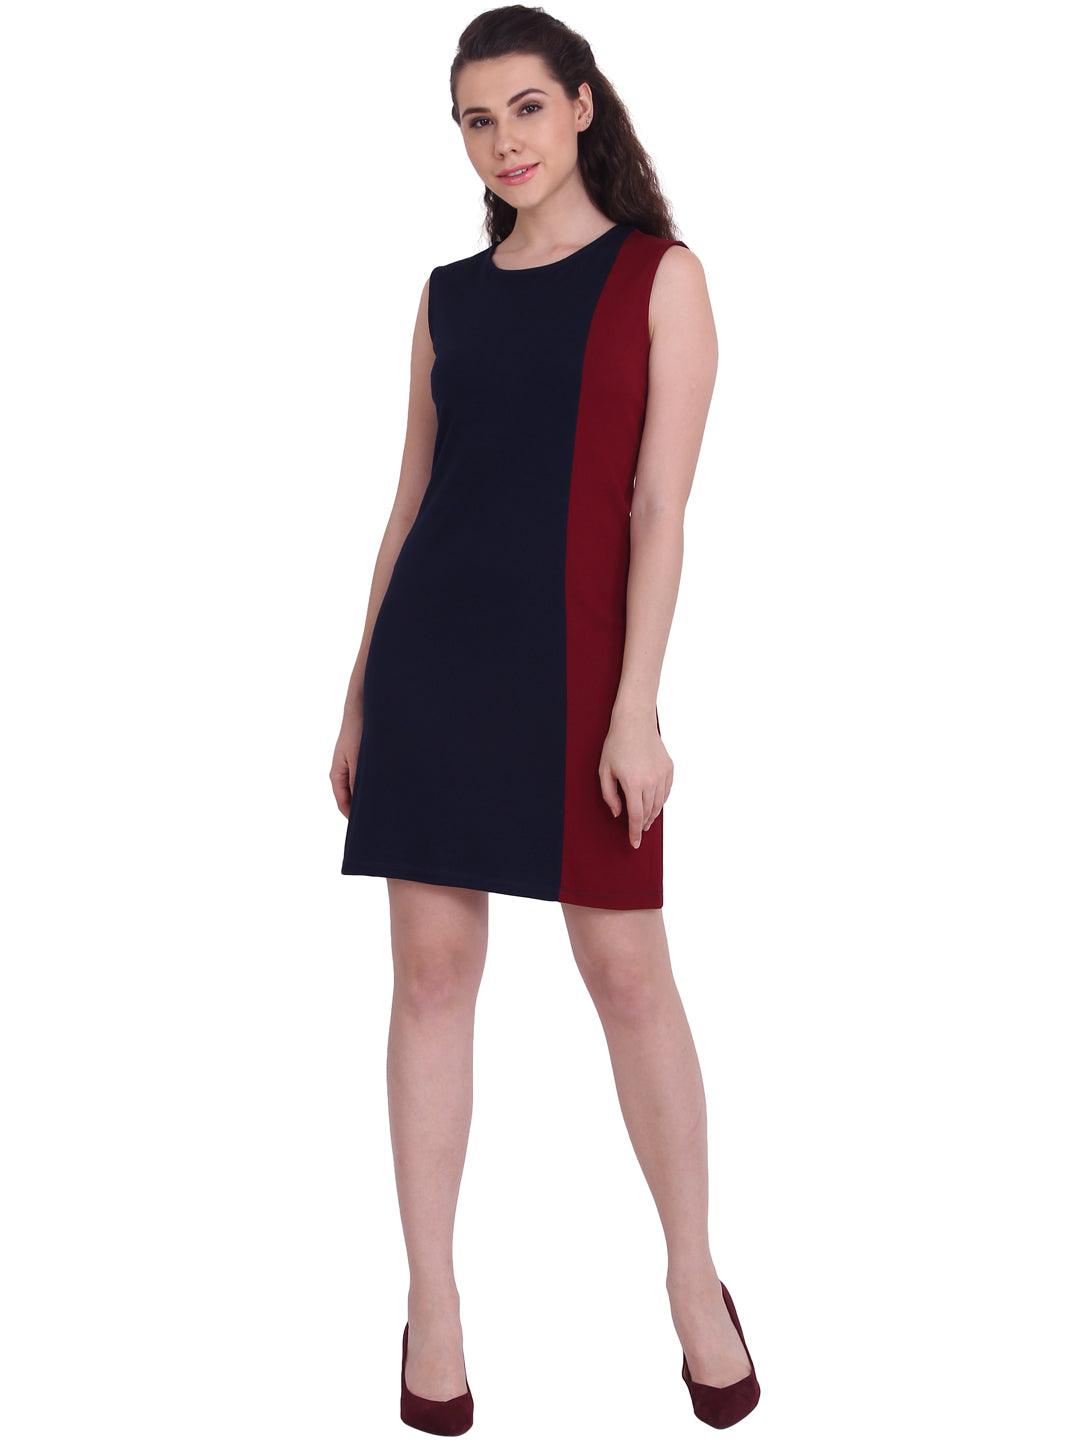 Red and Black Sleeveless Dress - Znxclothing